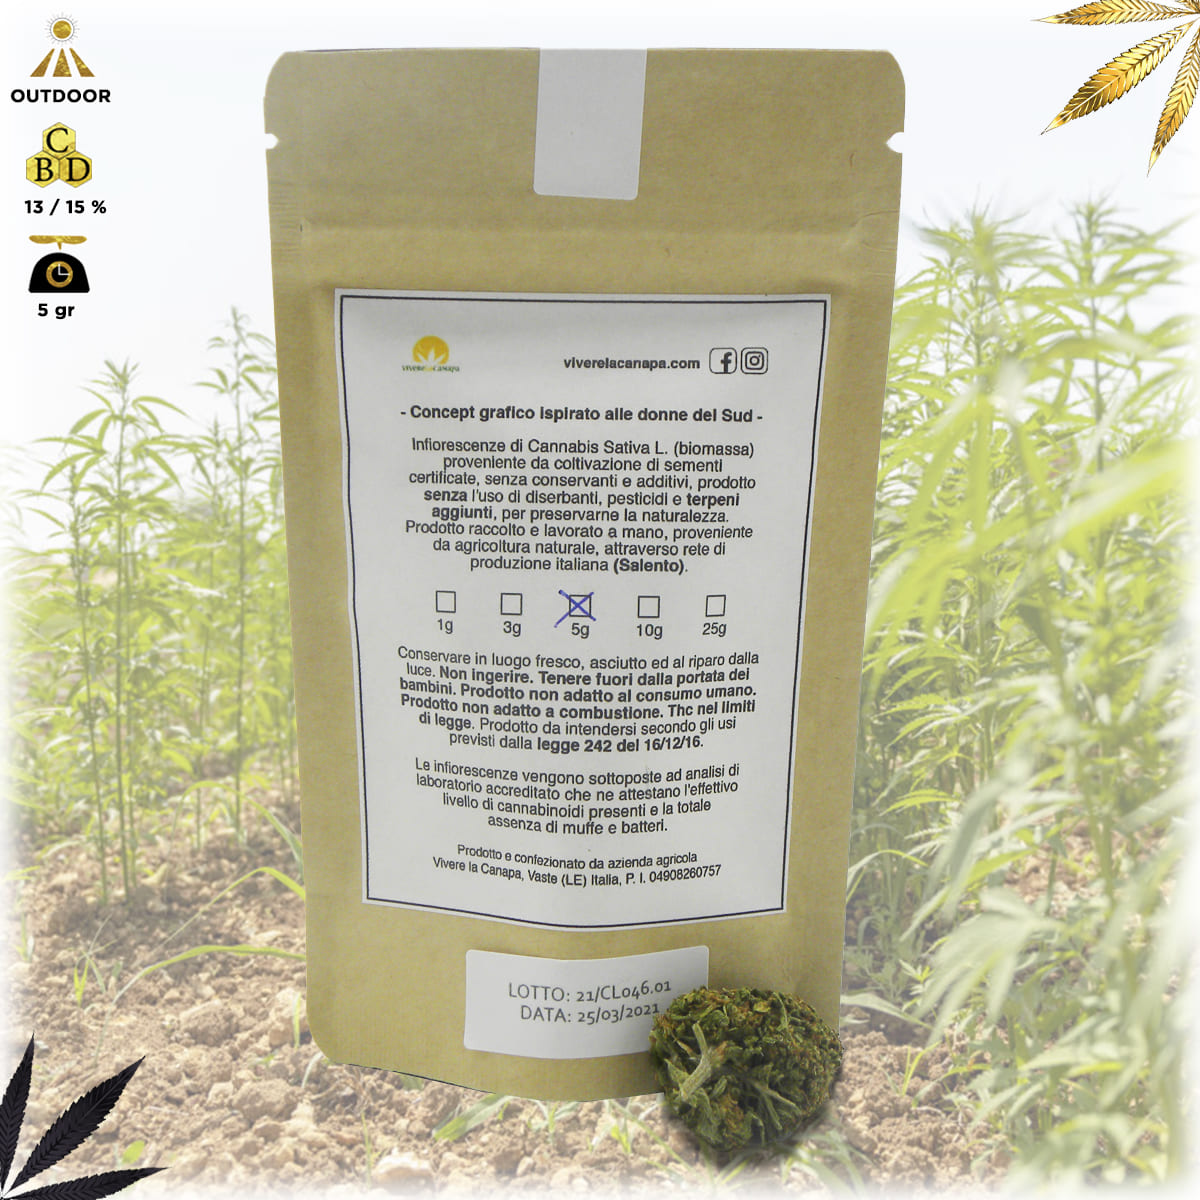 bud fiore infiorescenza cannabis light qualità mary sorbet bustina da 5 grammi